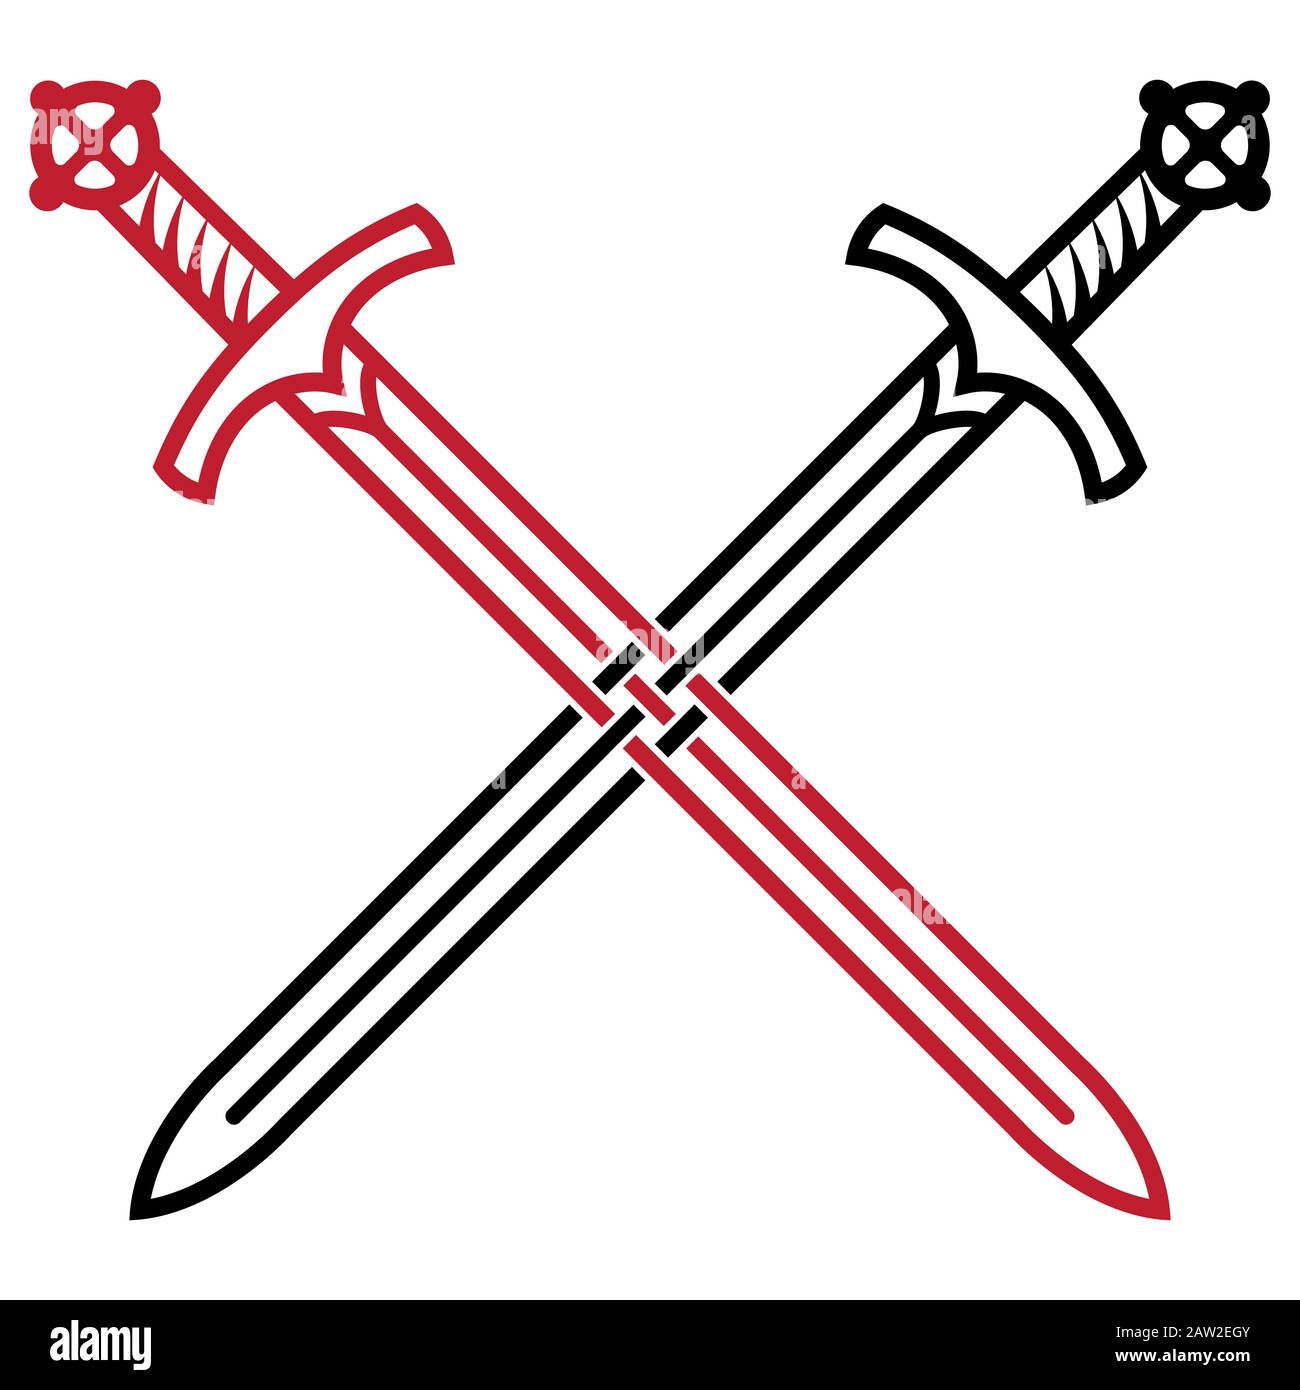 77 ideas de Espadas Medievales  espadas medievales, espadas, medieval